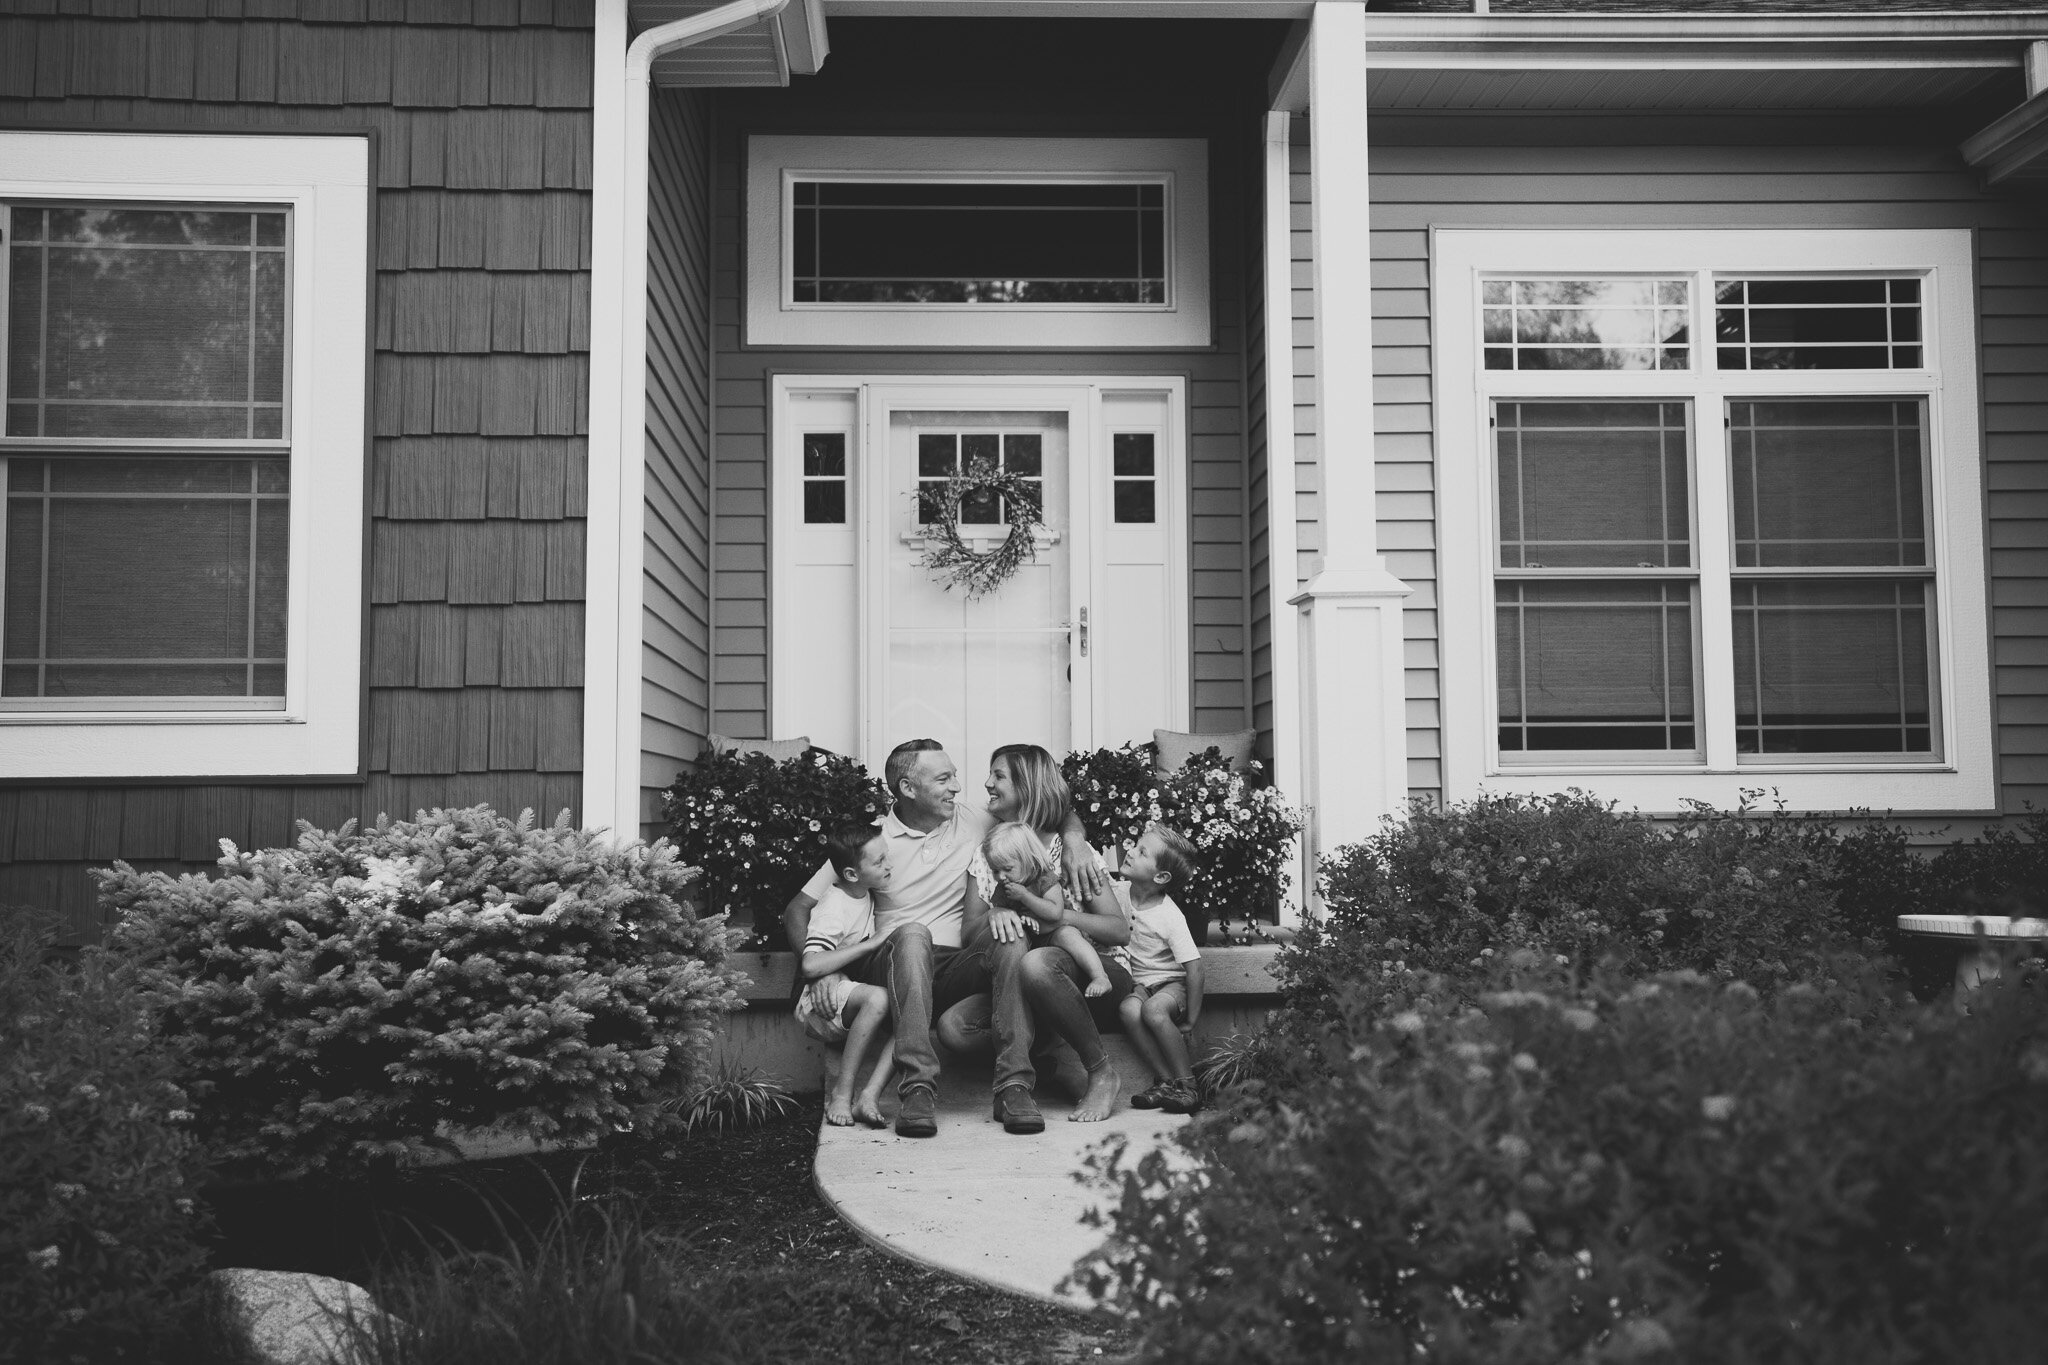 Clabuesch Family - Grand Rapids Family Photographer - Grand Rapids Lifestyle Photographer - Jessica Darling - J Darling Photo003.jpg